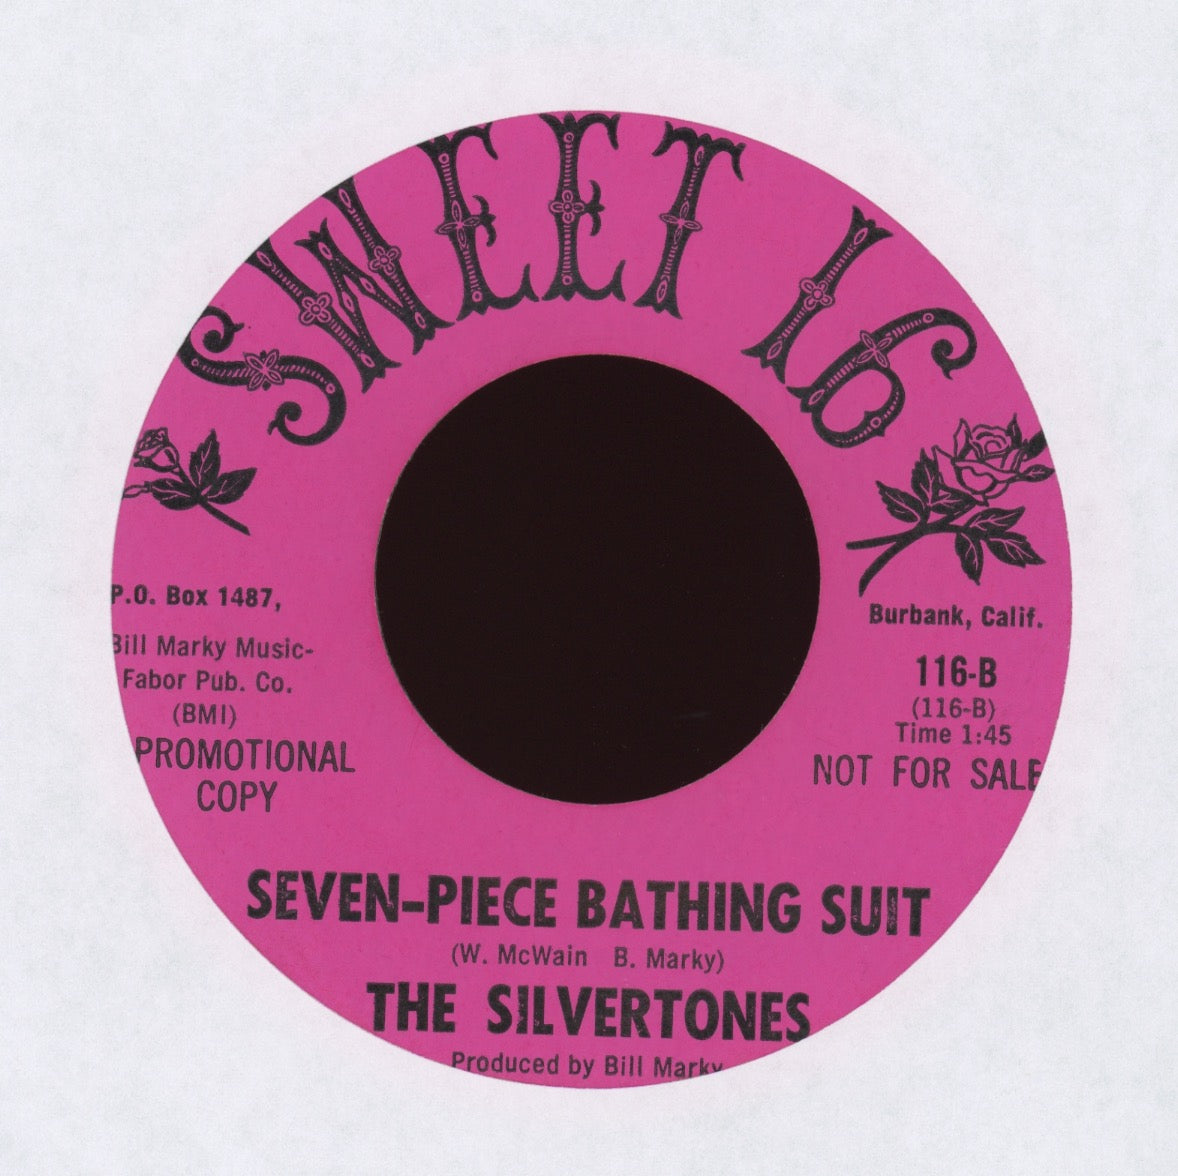 The Silvertones - Seven-Piece Bathing Suit on Sweet 16 Promo